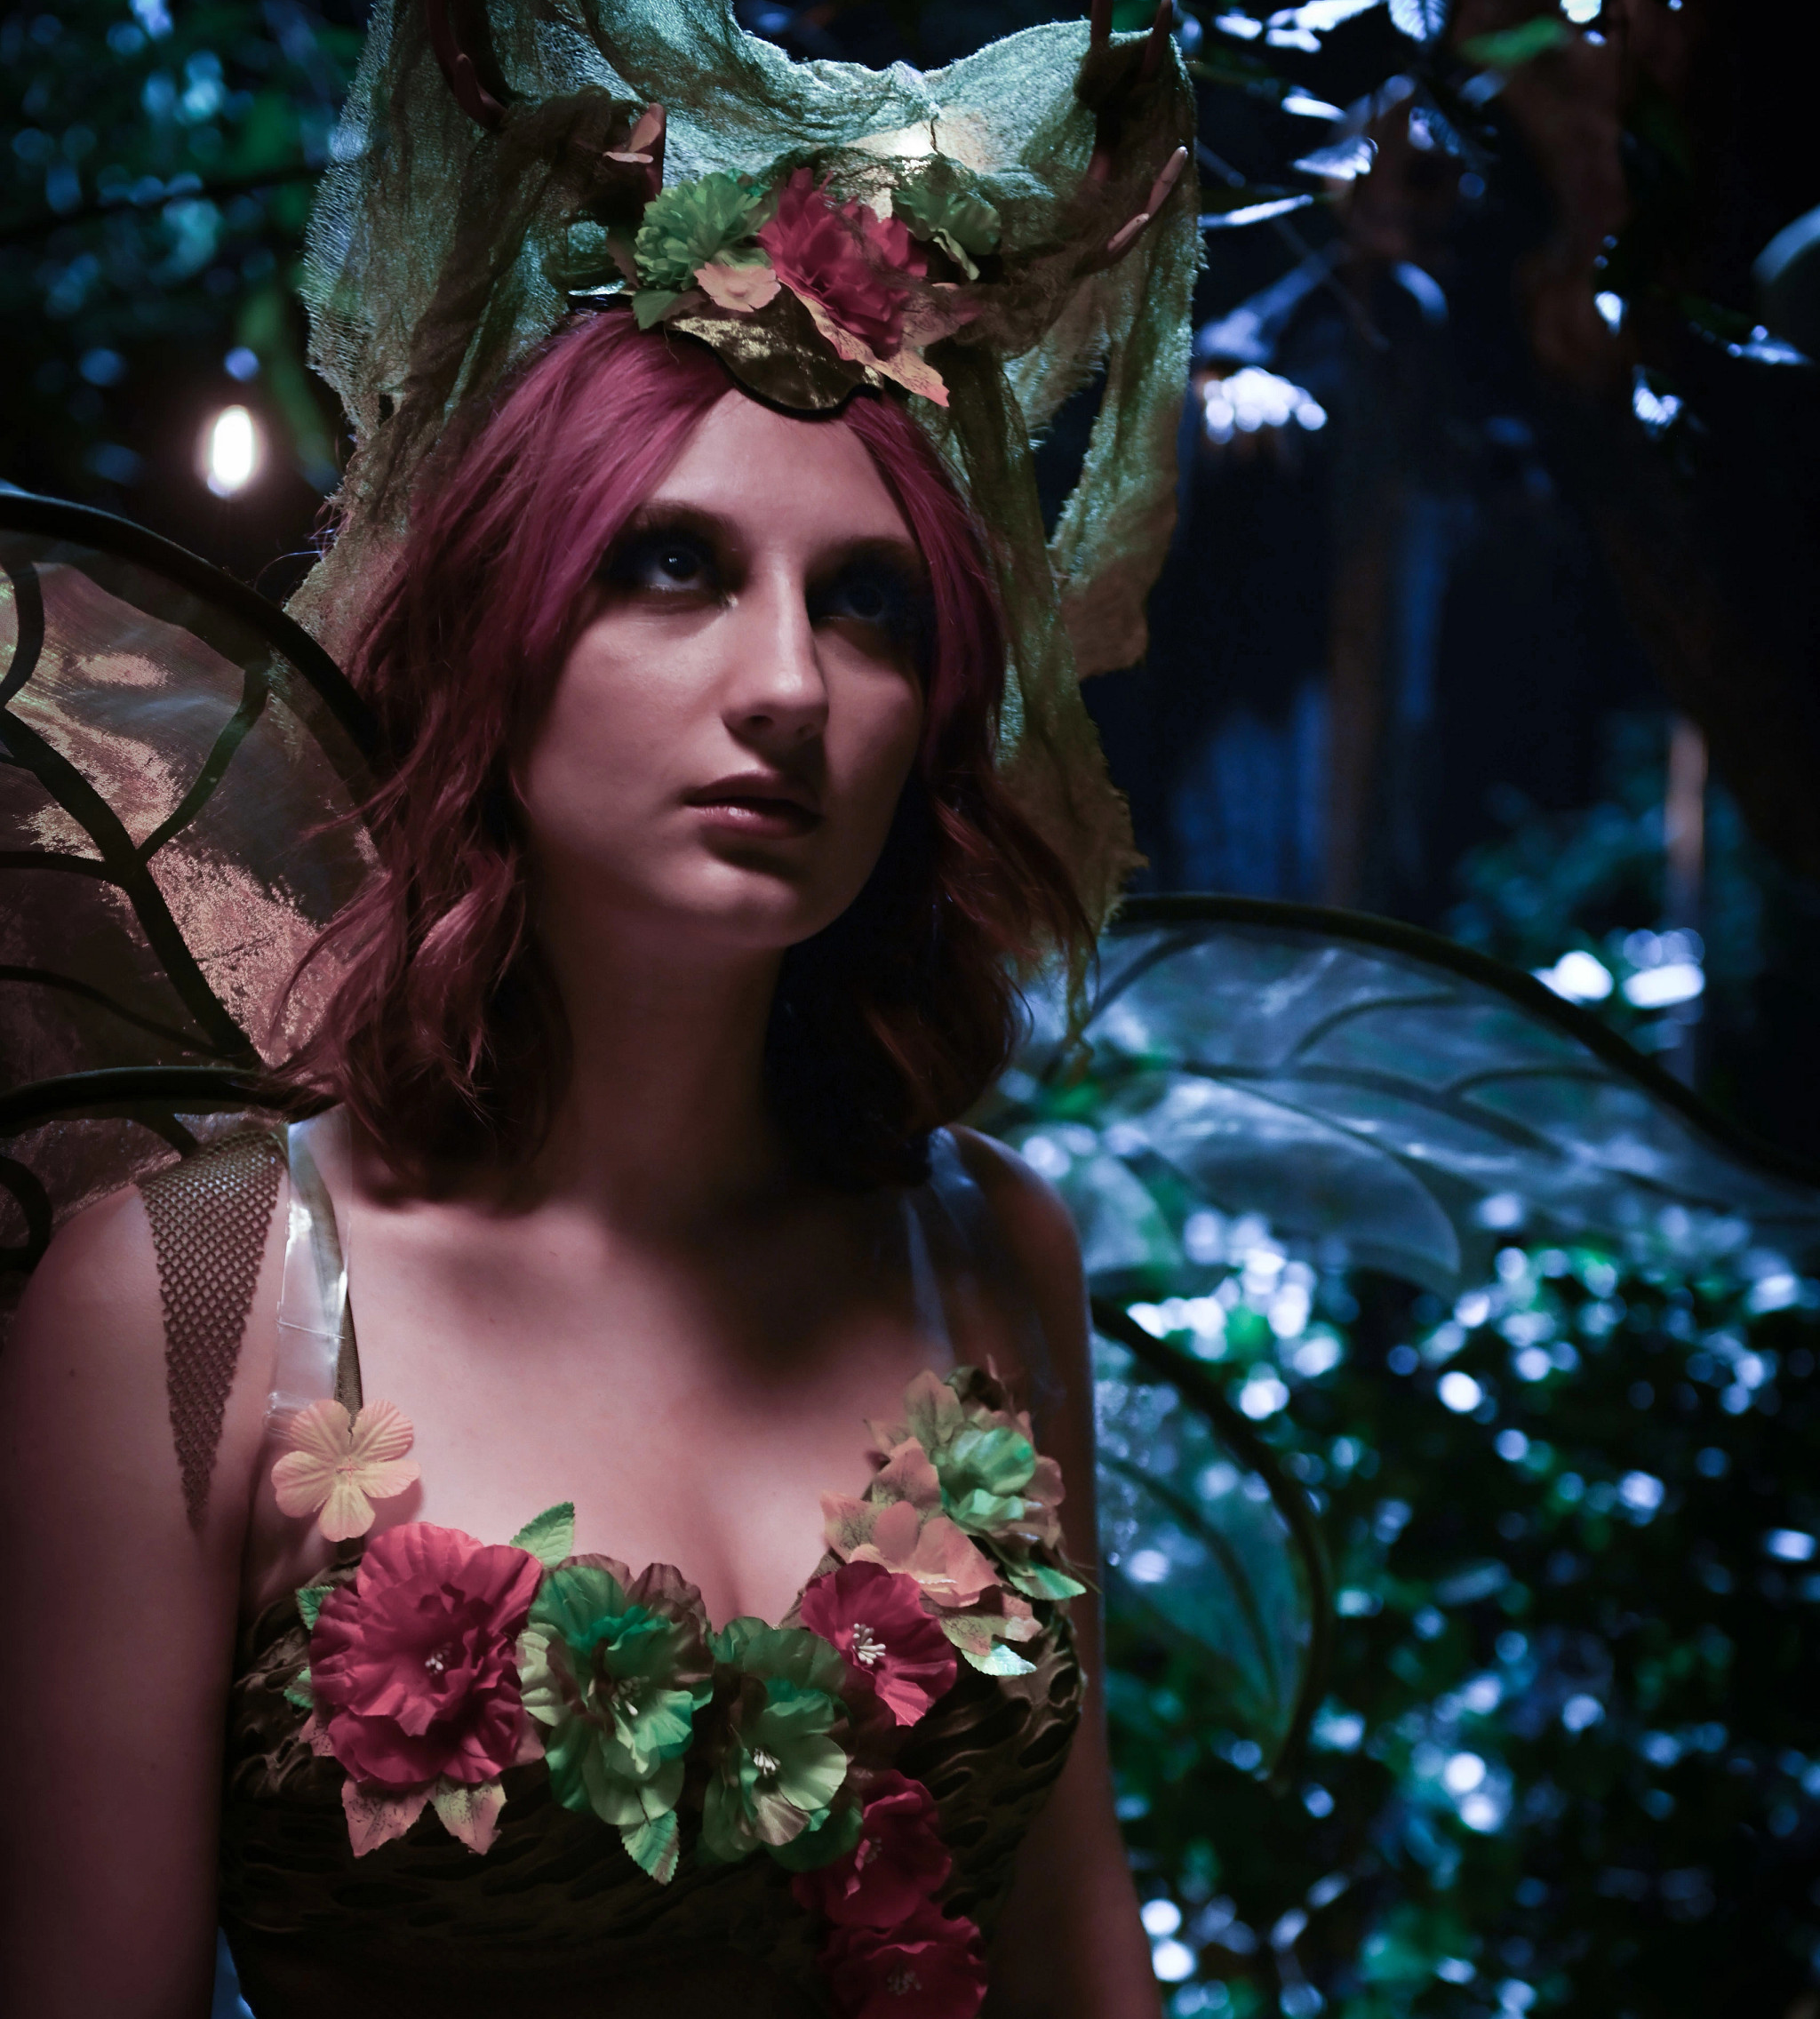 A girl dressed as a woodland fairy